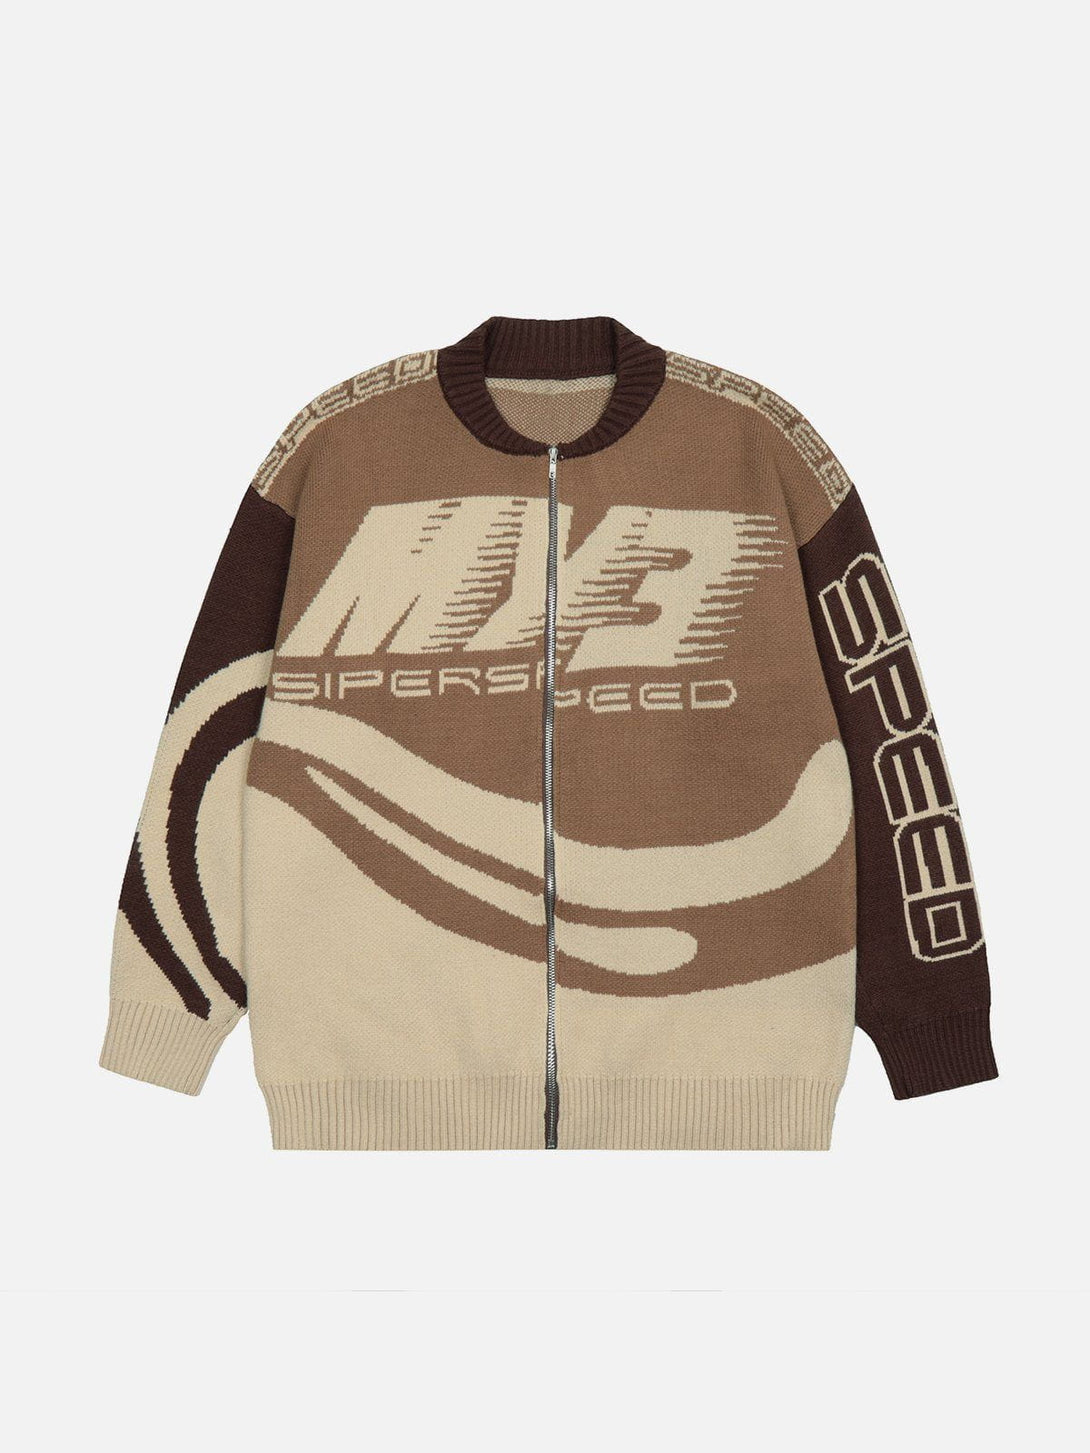 Majesda® - "SPEED" Racing Cardigan outfit ideas streetwear fashion